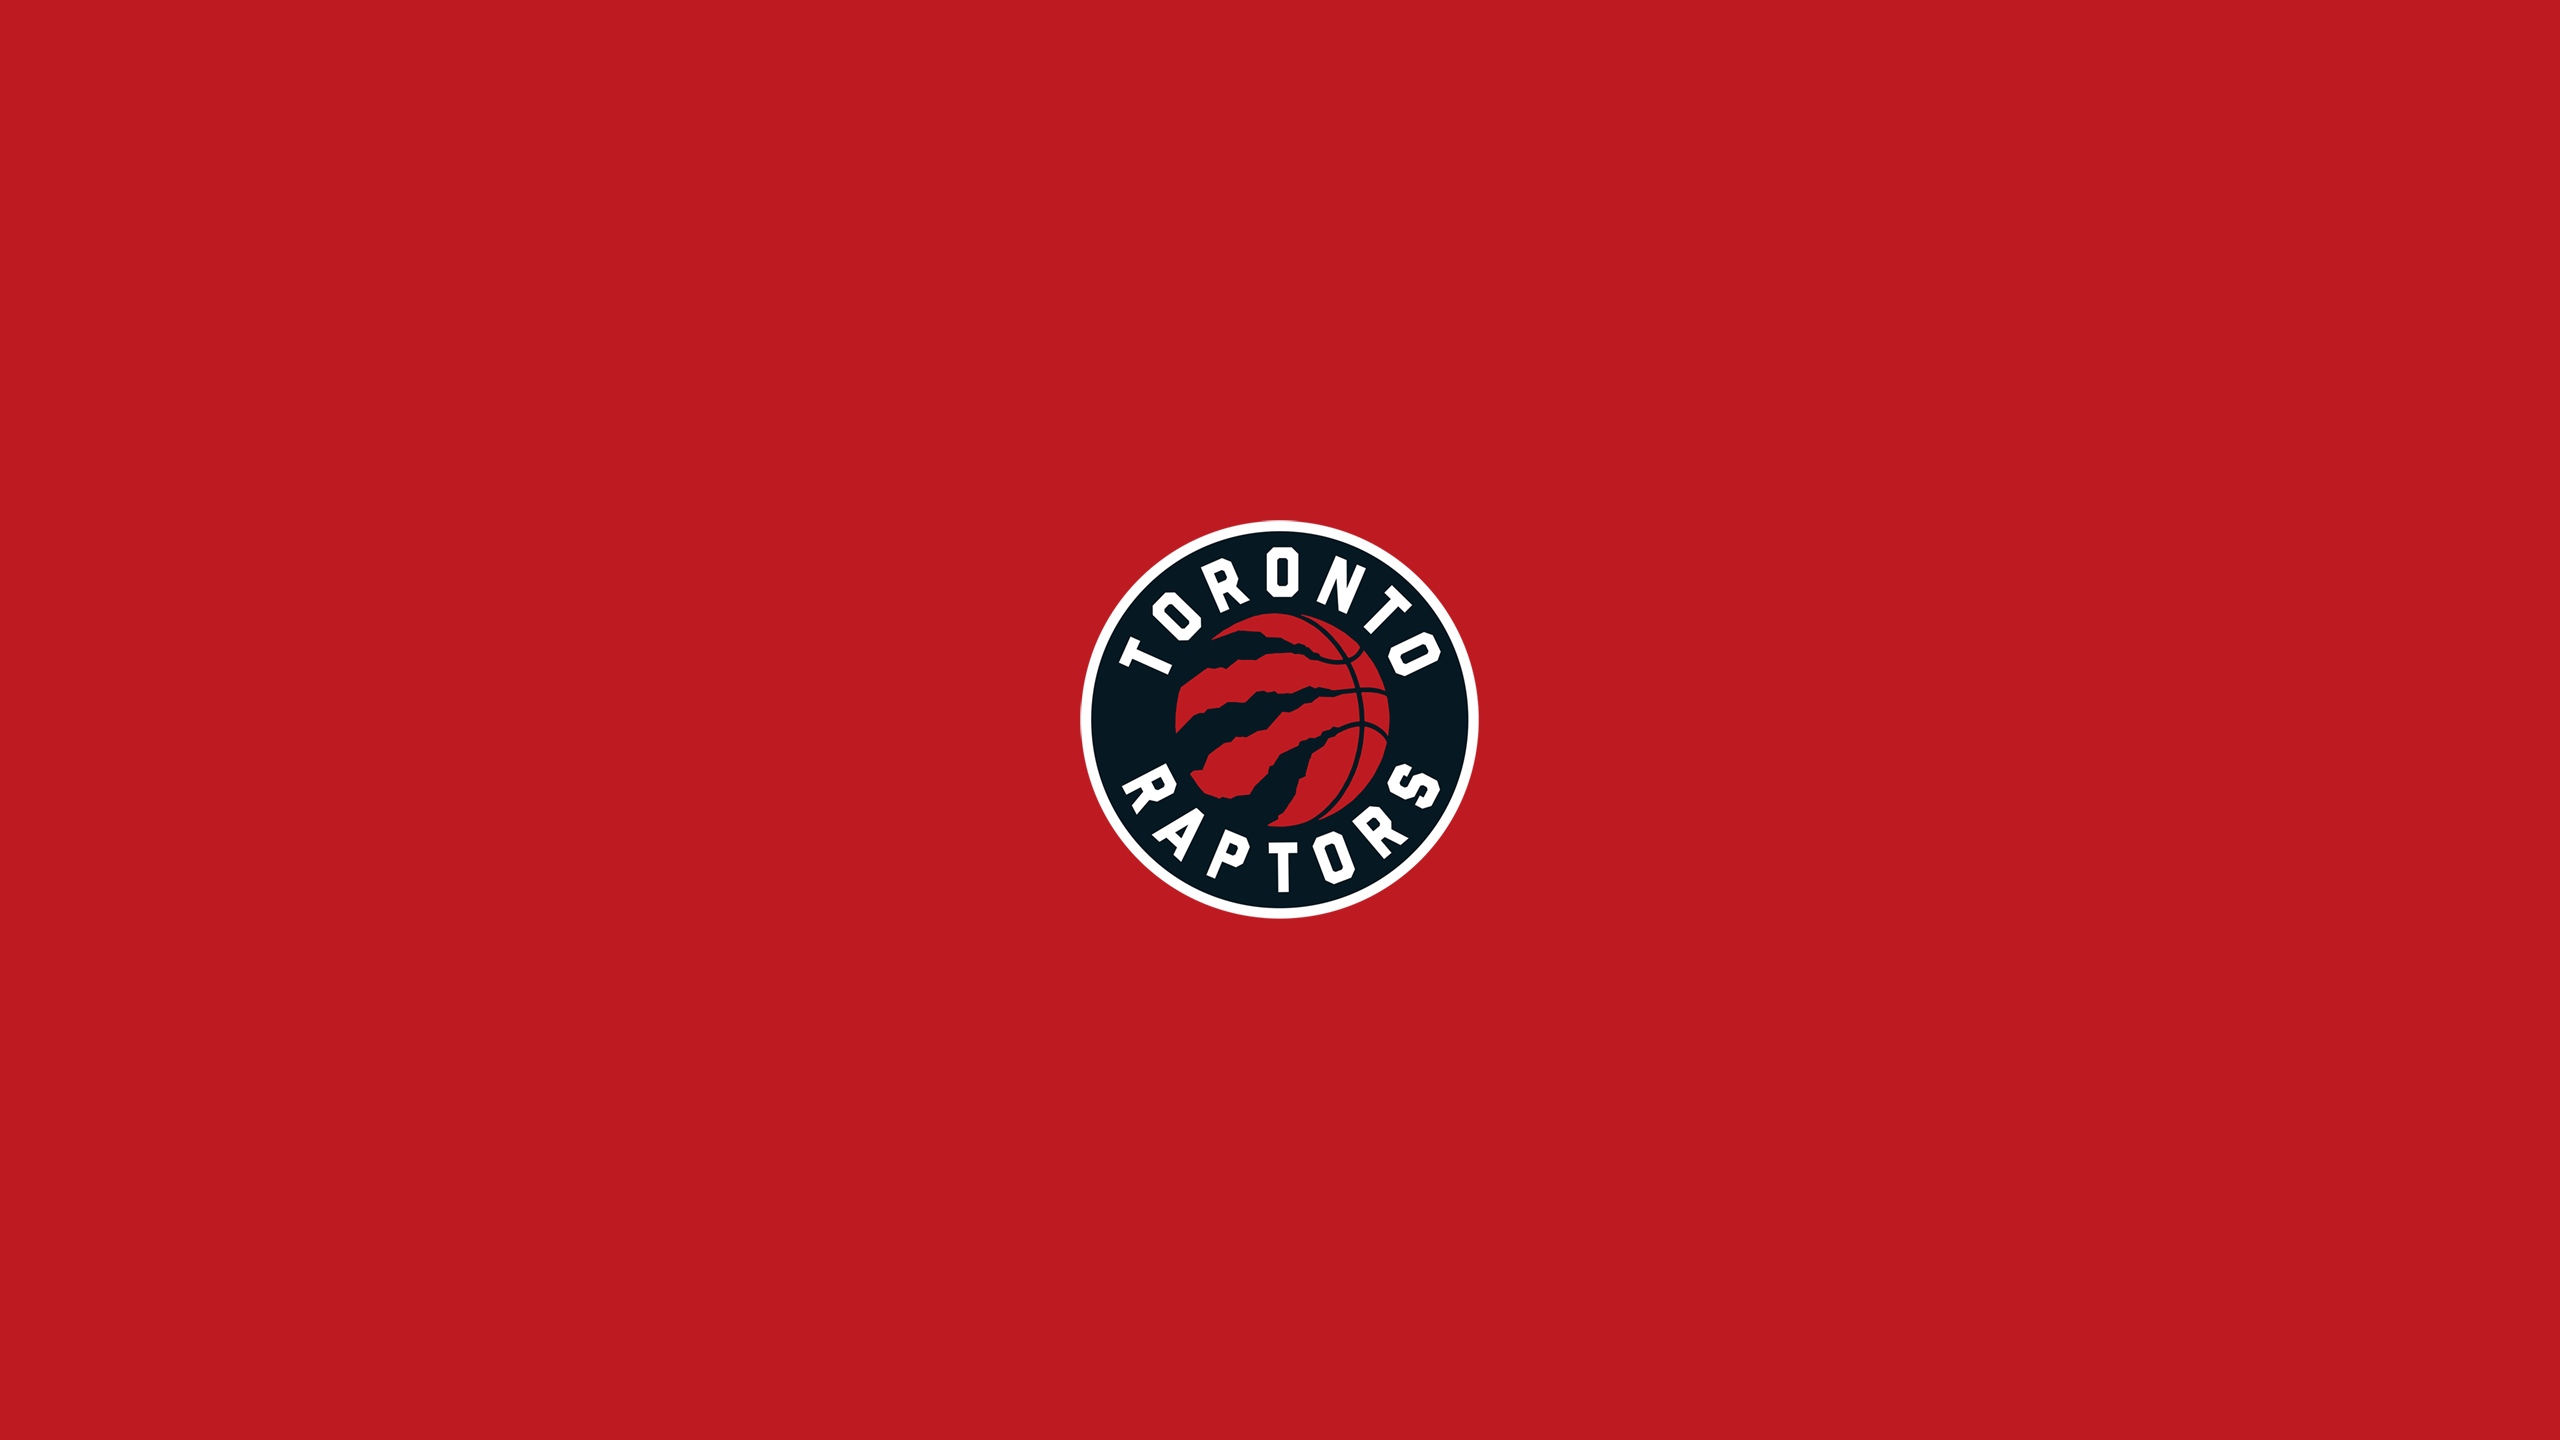 Toronto Raptors - Square Bettor